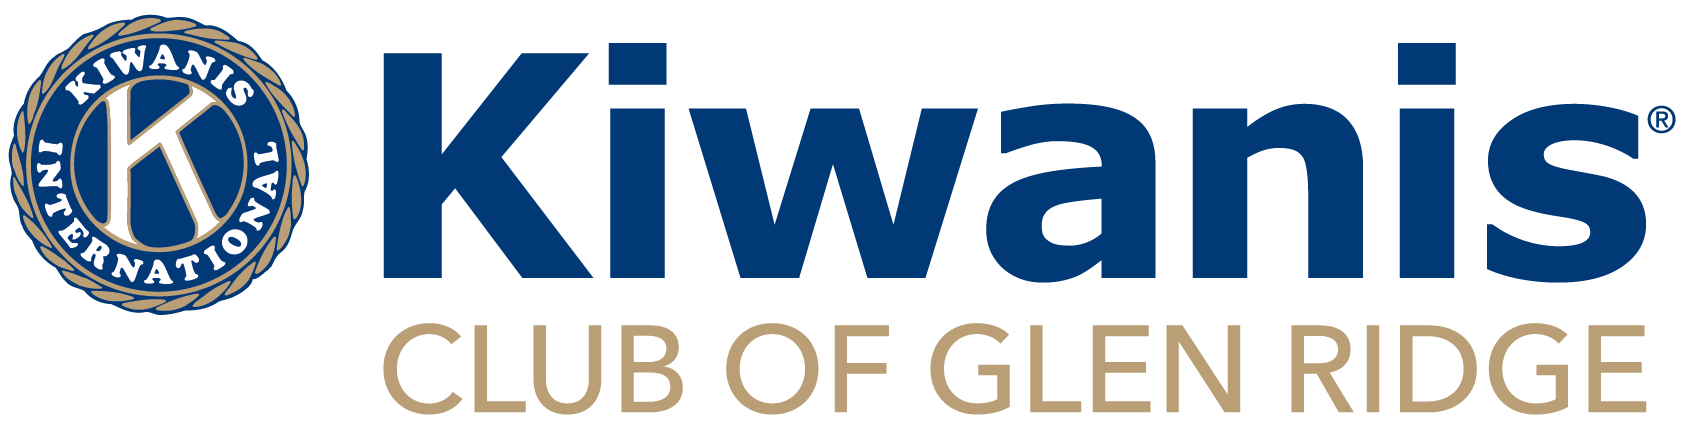 Kiwanis Club of Glen Ridge